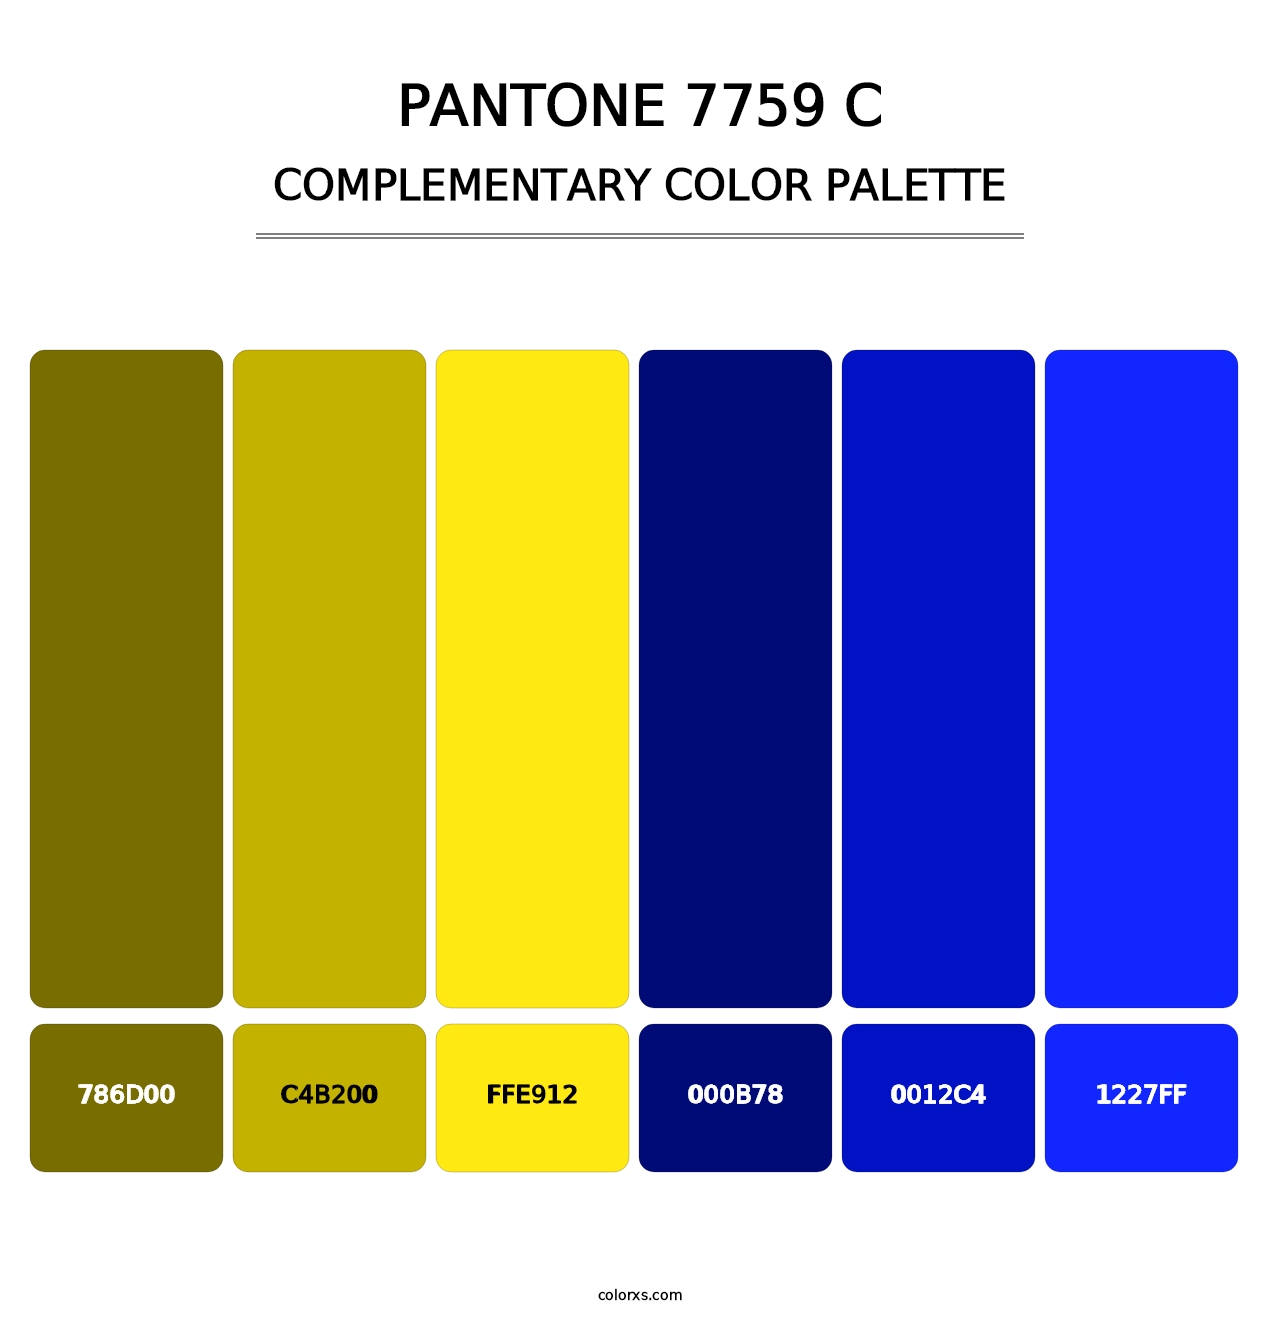 PANTONE 7759 C - Complementary Color Palette